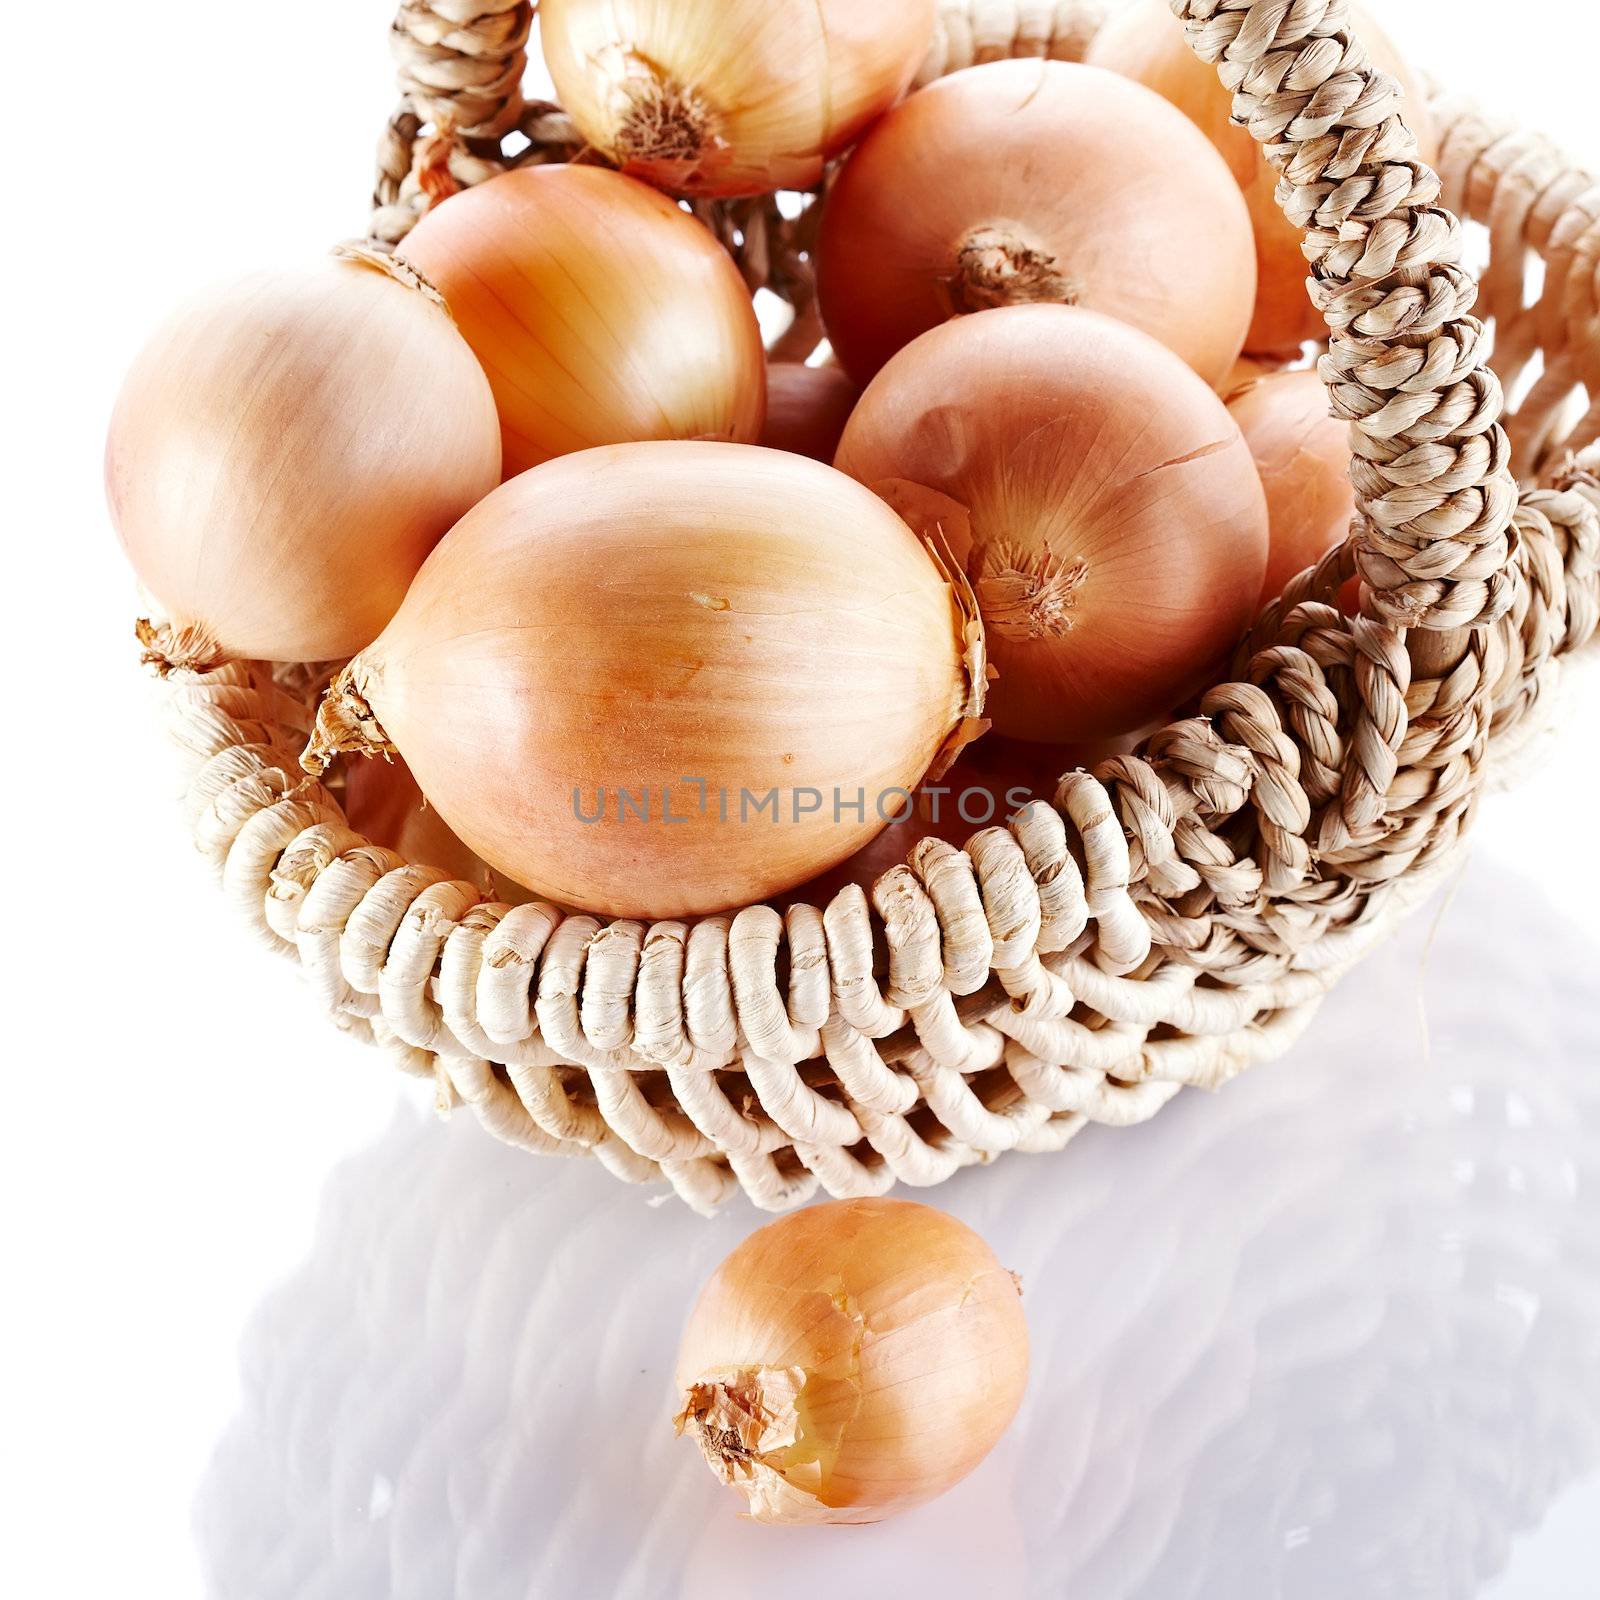 Onions napiform in a basket by Azaliya